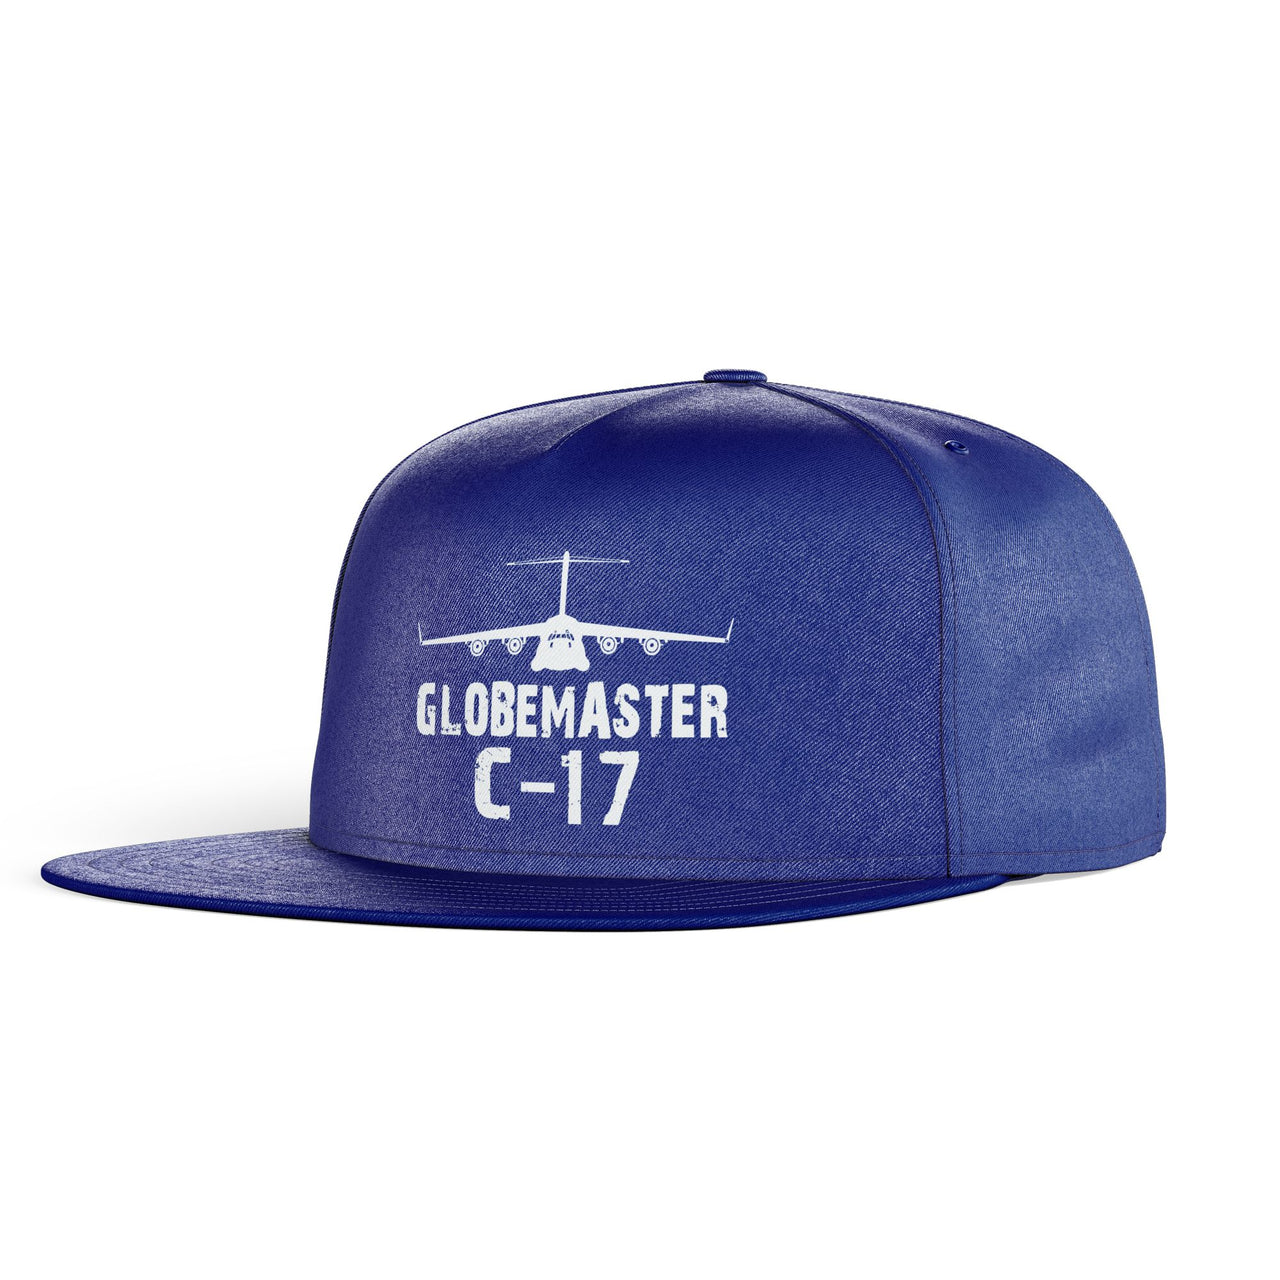 GlobeMaster C-17 & Plane Designed Snapback Caps & Hats